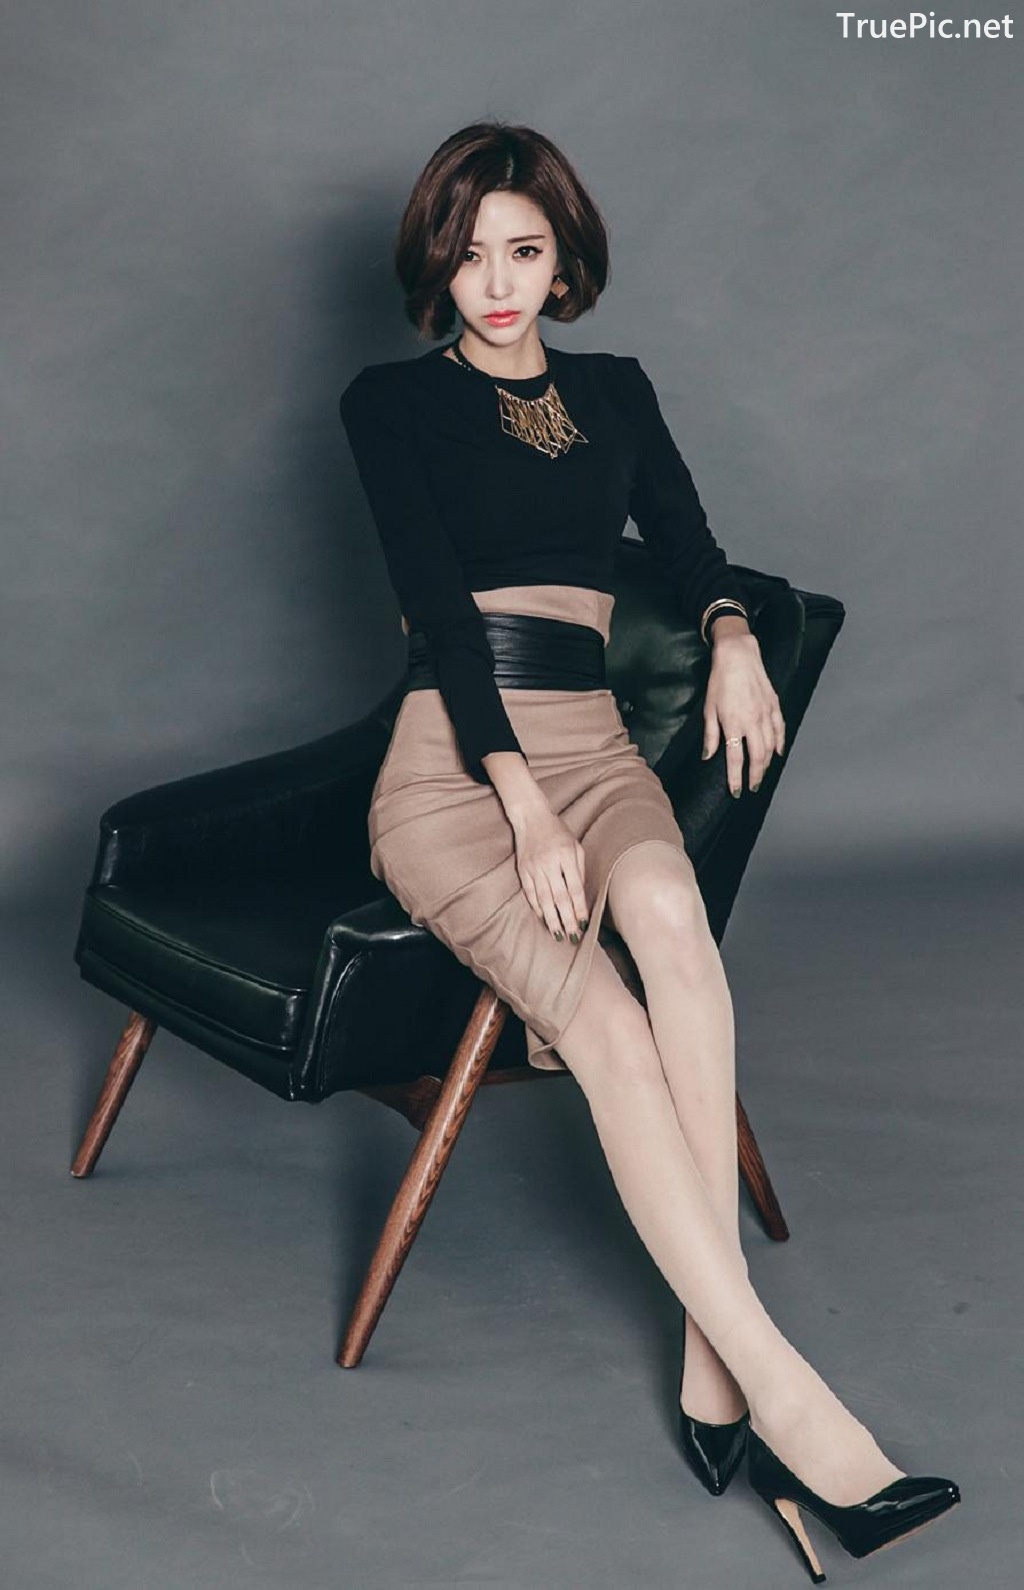 Image Ye Jin - Korean Fashion Model - Studio Photoshoot Collection - TruePic.net - Picture-19